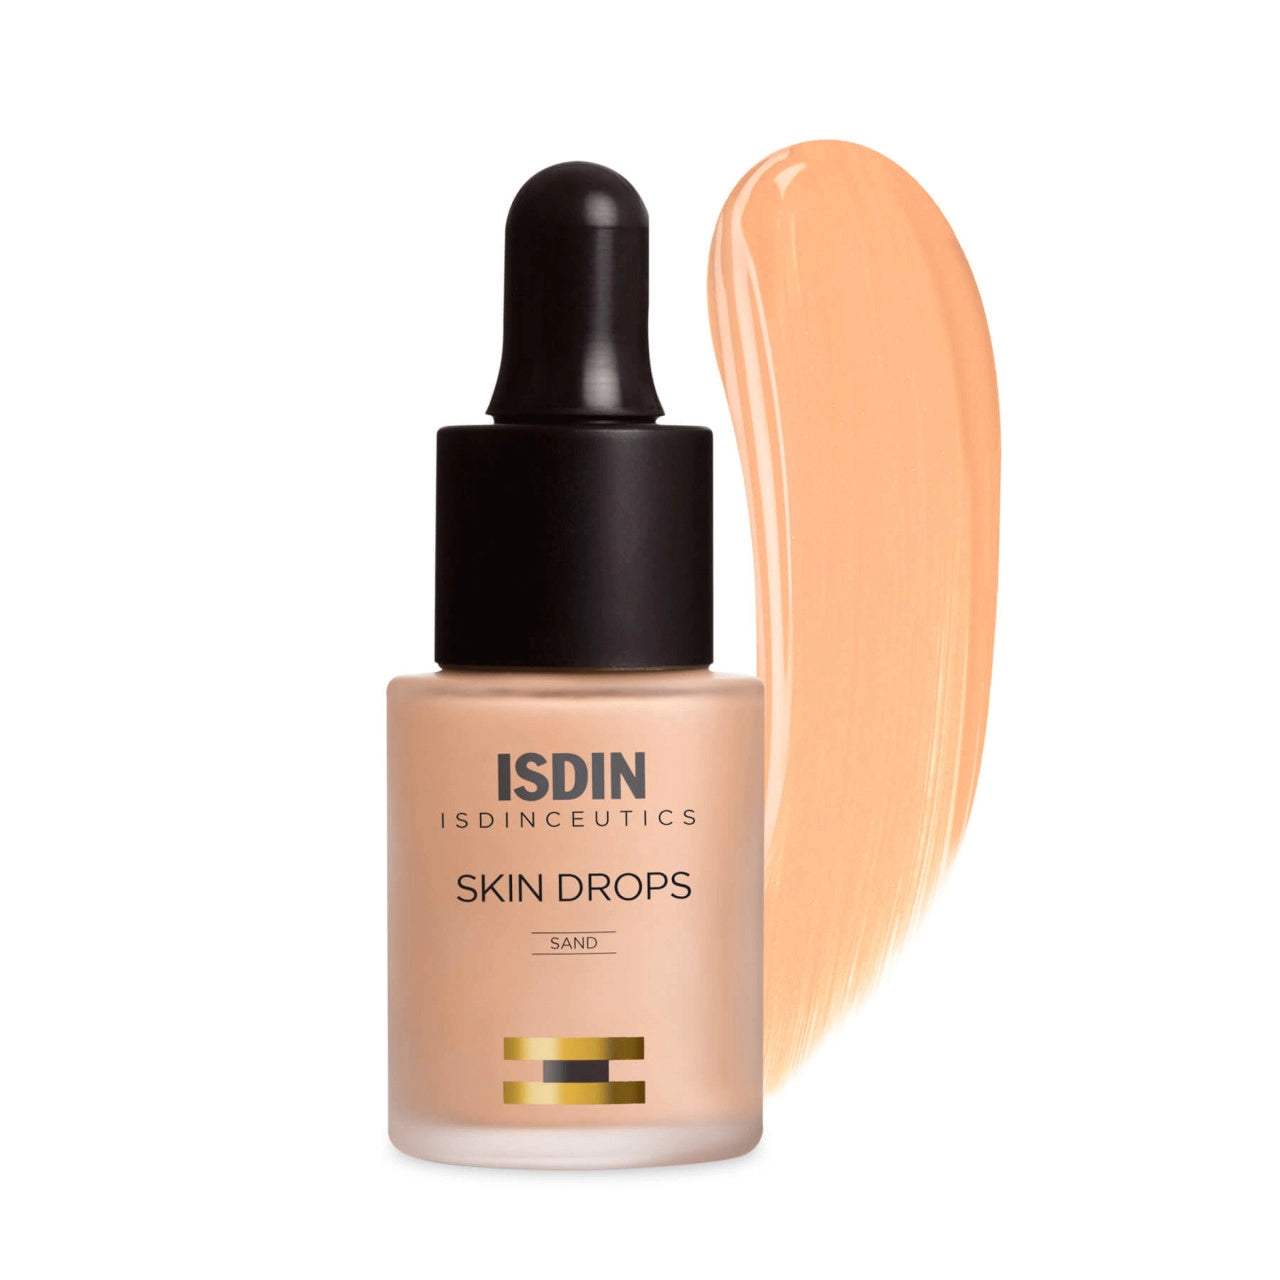 ISDIN Isdinceutics Skin Drops